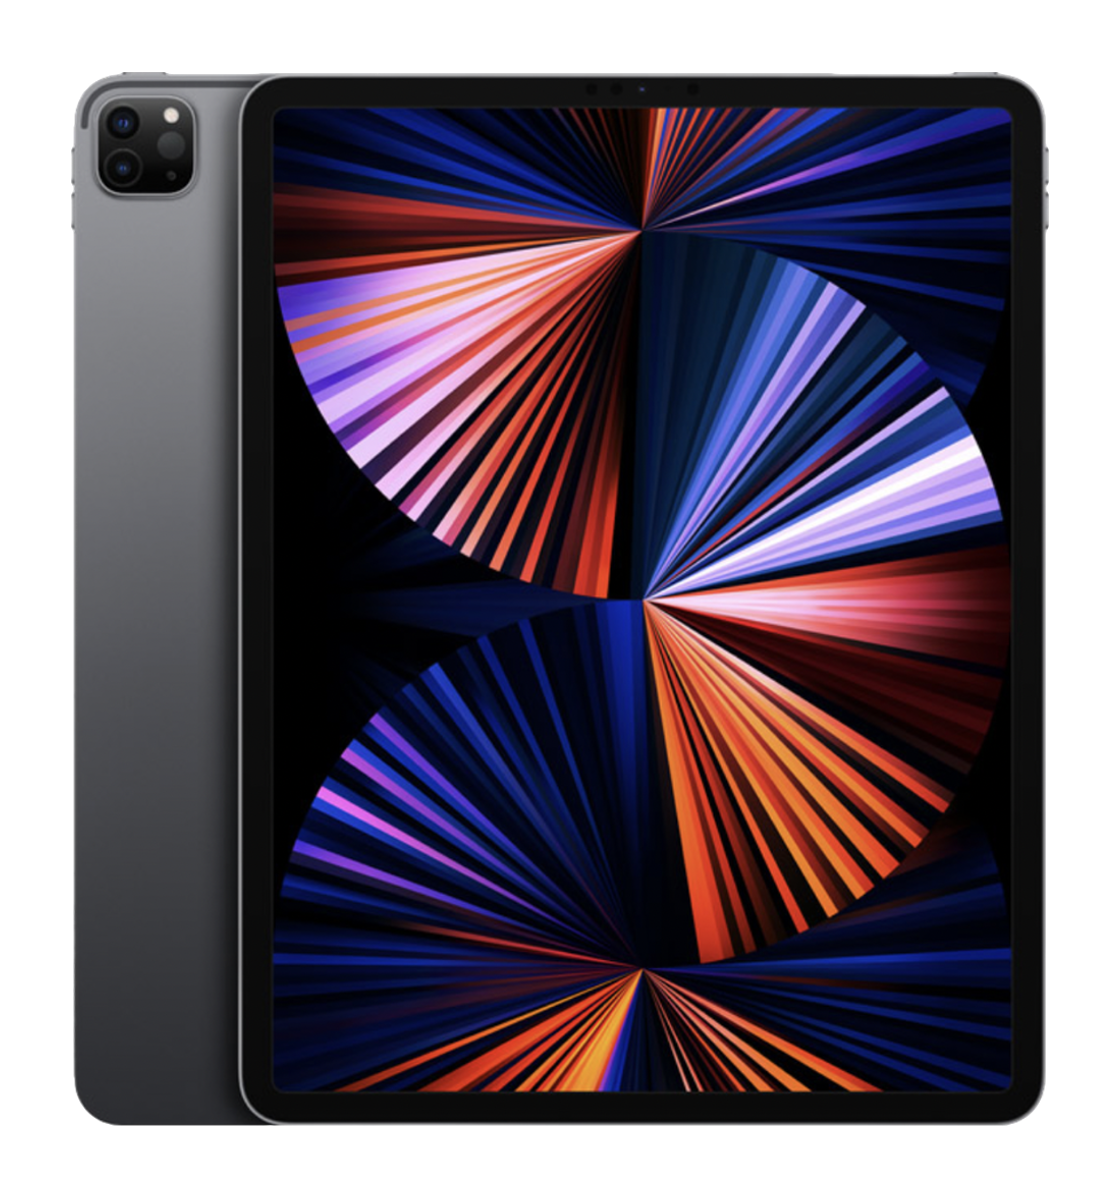 iPad Pro 12.9" (2021)